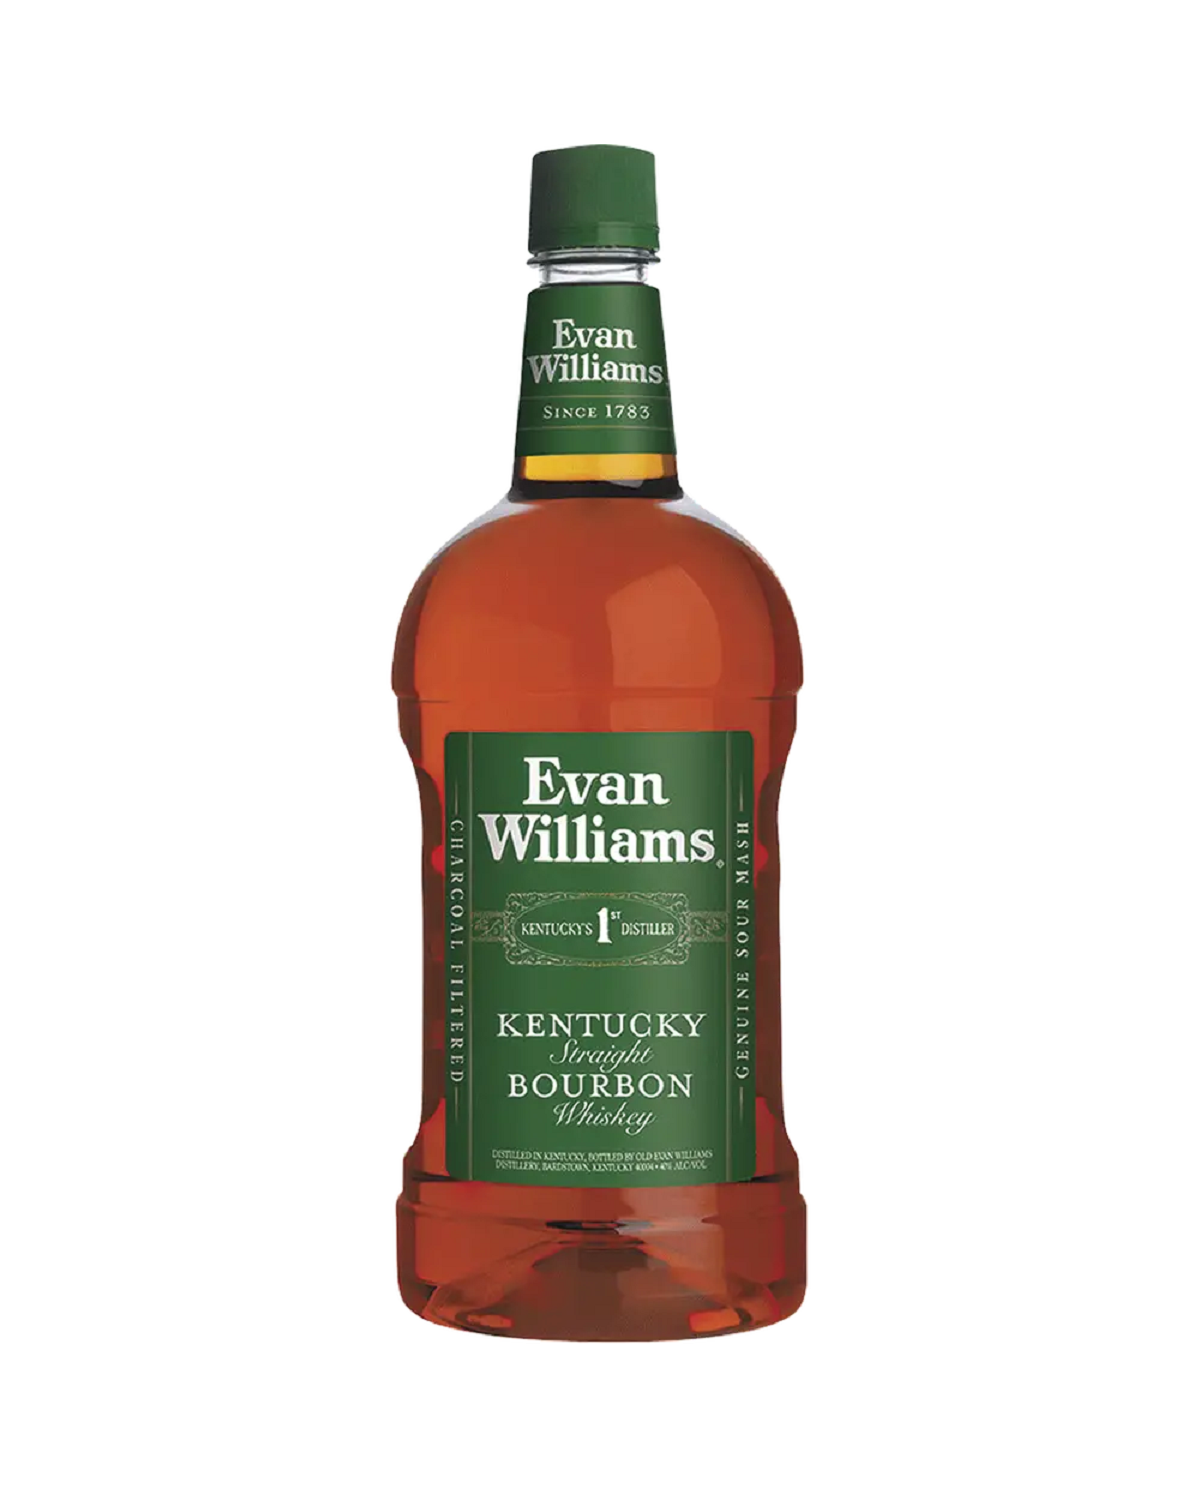 Evan Williams Green 1.75L